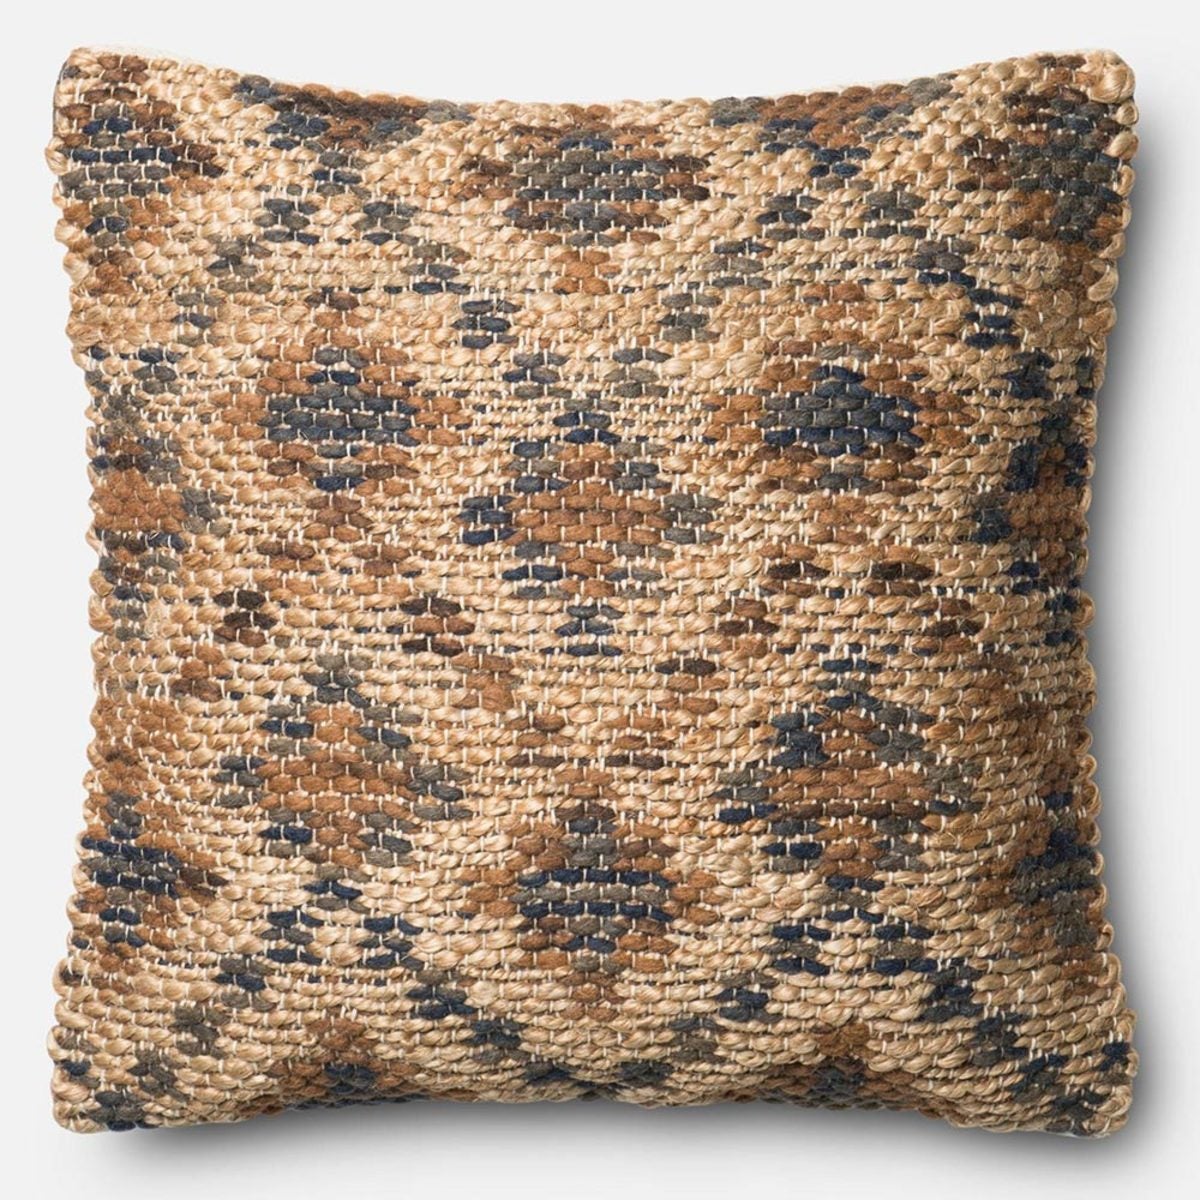 Loloi Modern Aztec Throw Pillow in Brown - Brown